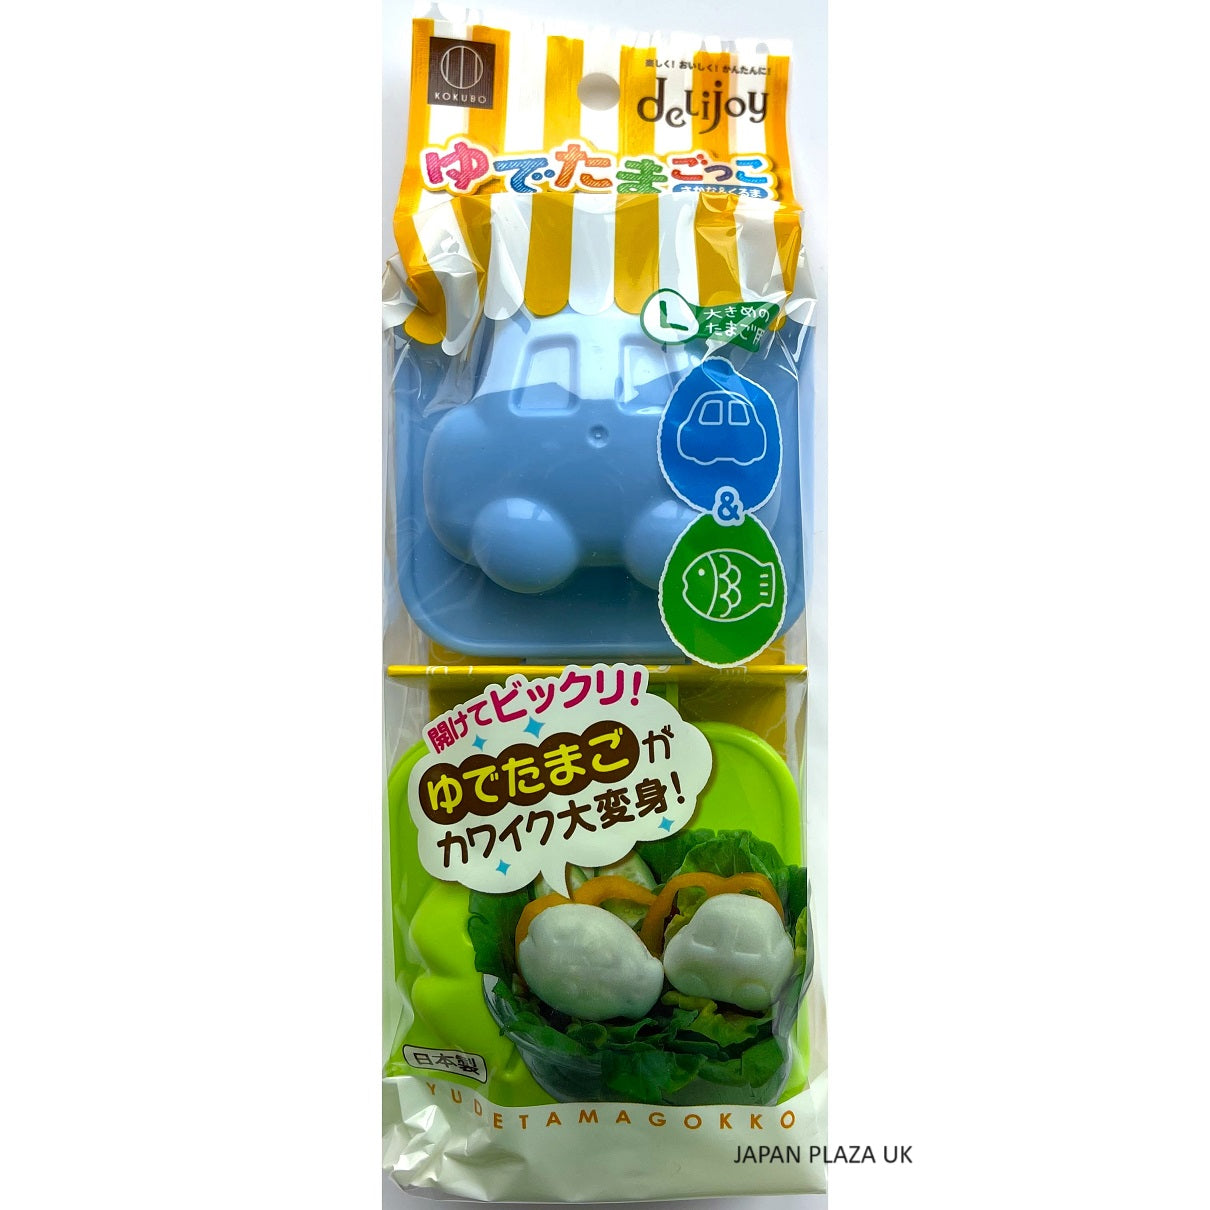 Buy KOKUBO Egg Mold Car & Fish - Color by Random (Made in Japan)